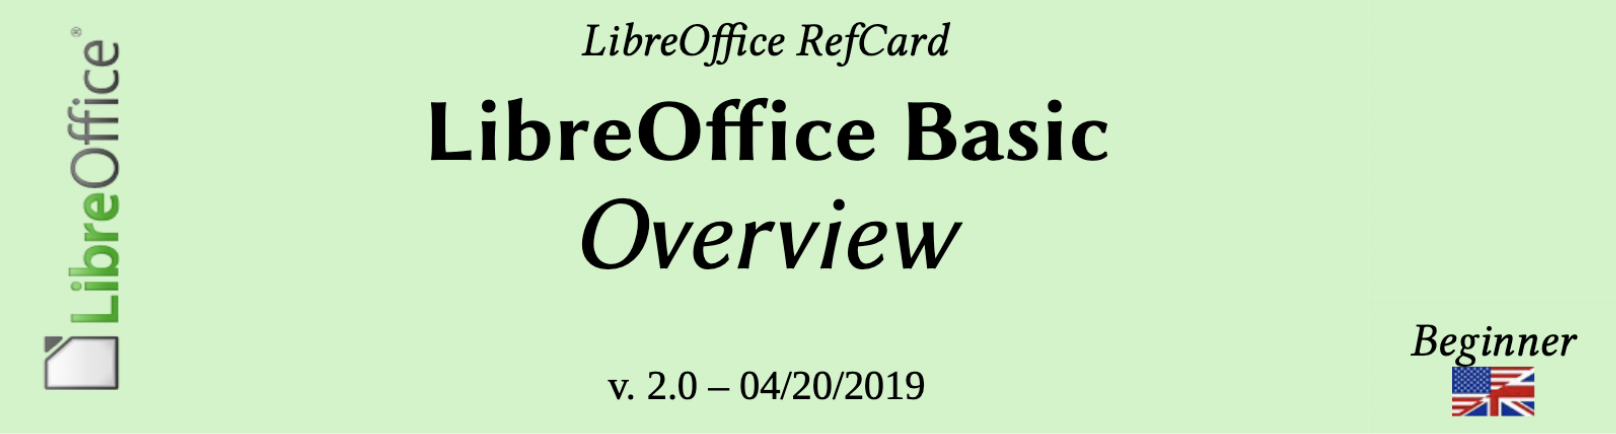 LibreOffice reference card header